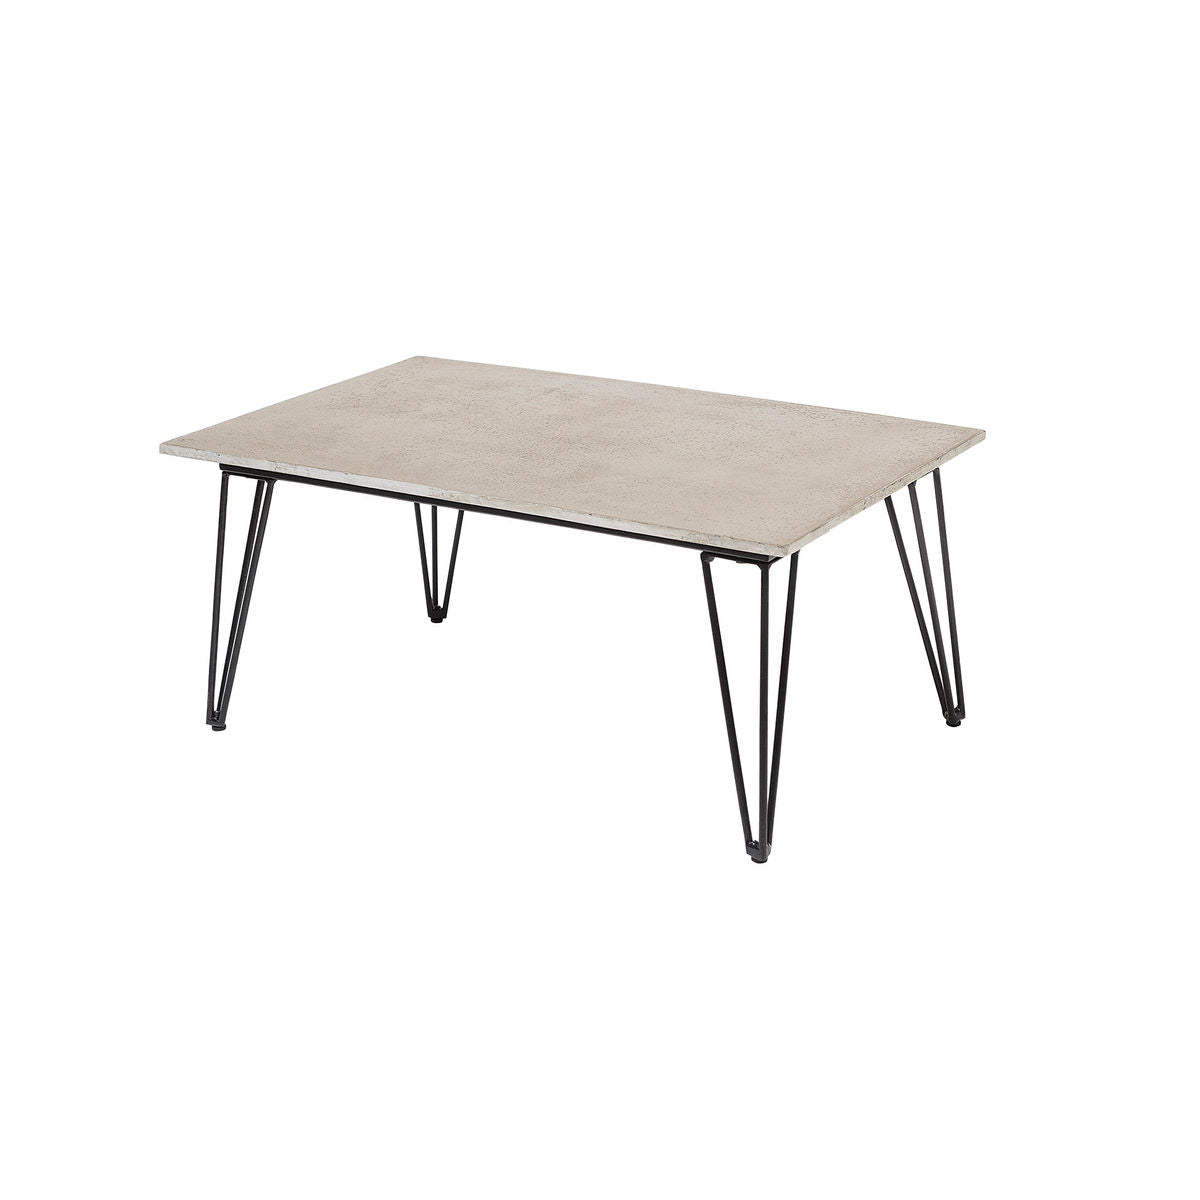 Bloomingville Mundo coffee table, gray, fiber cement